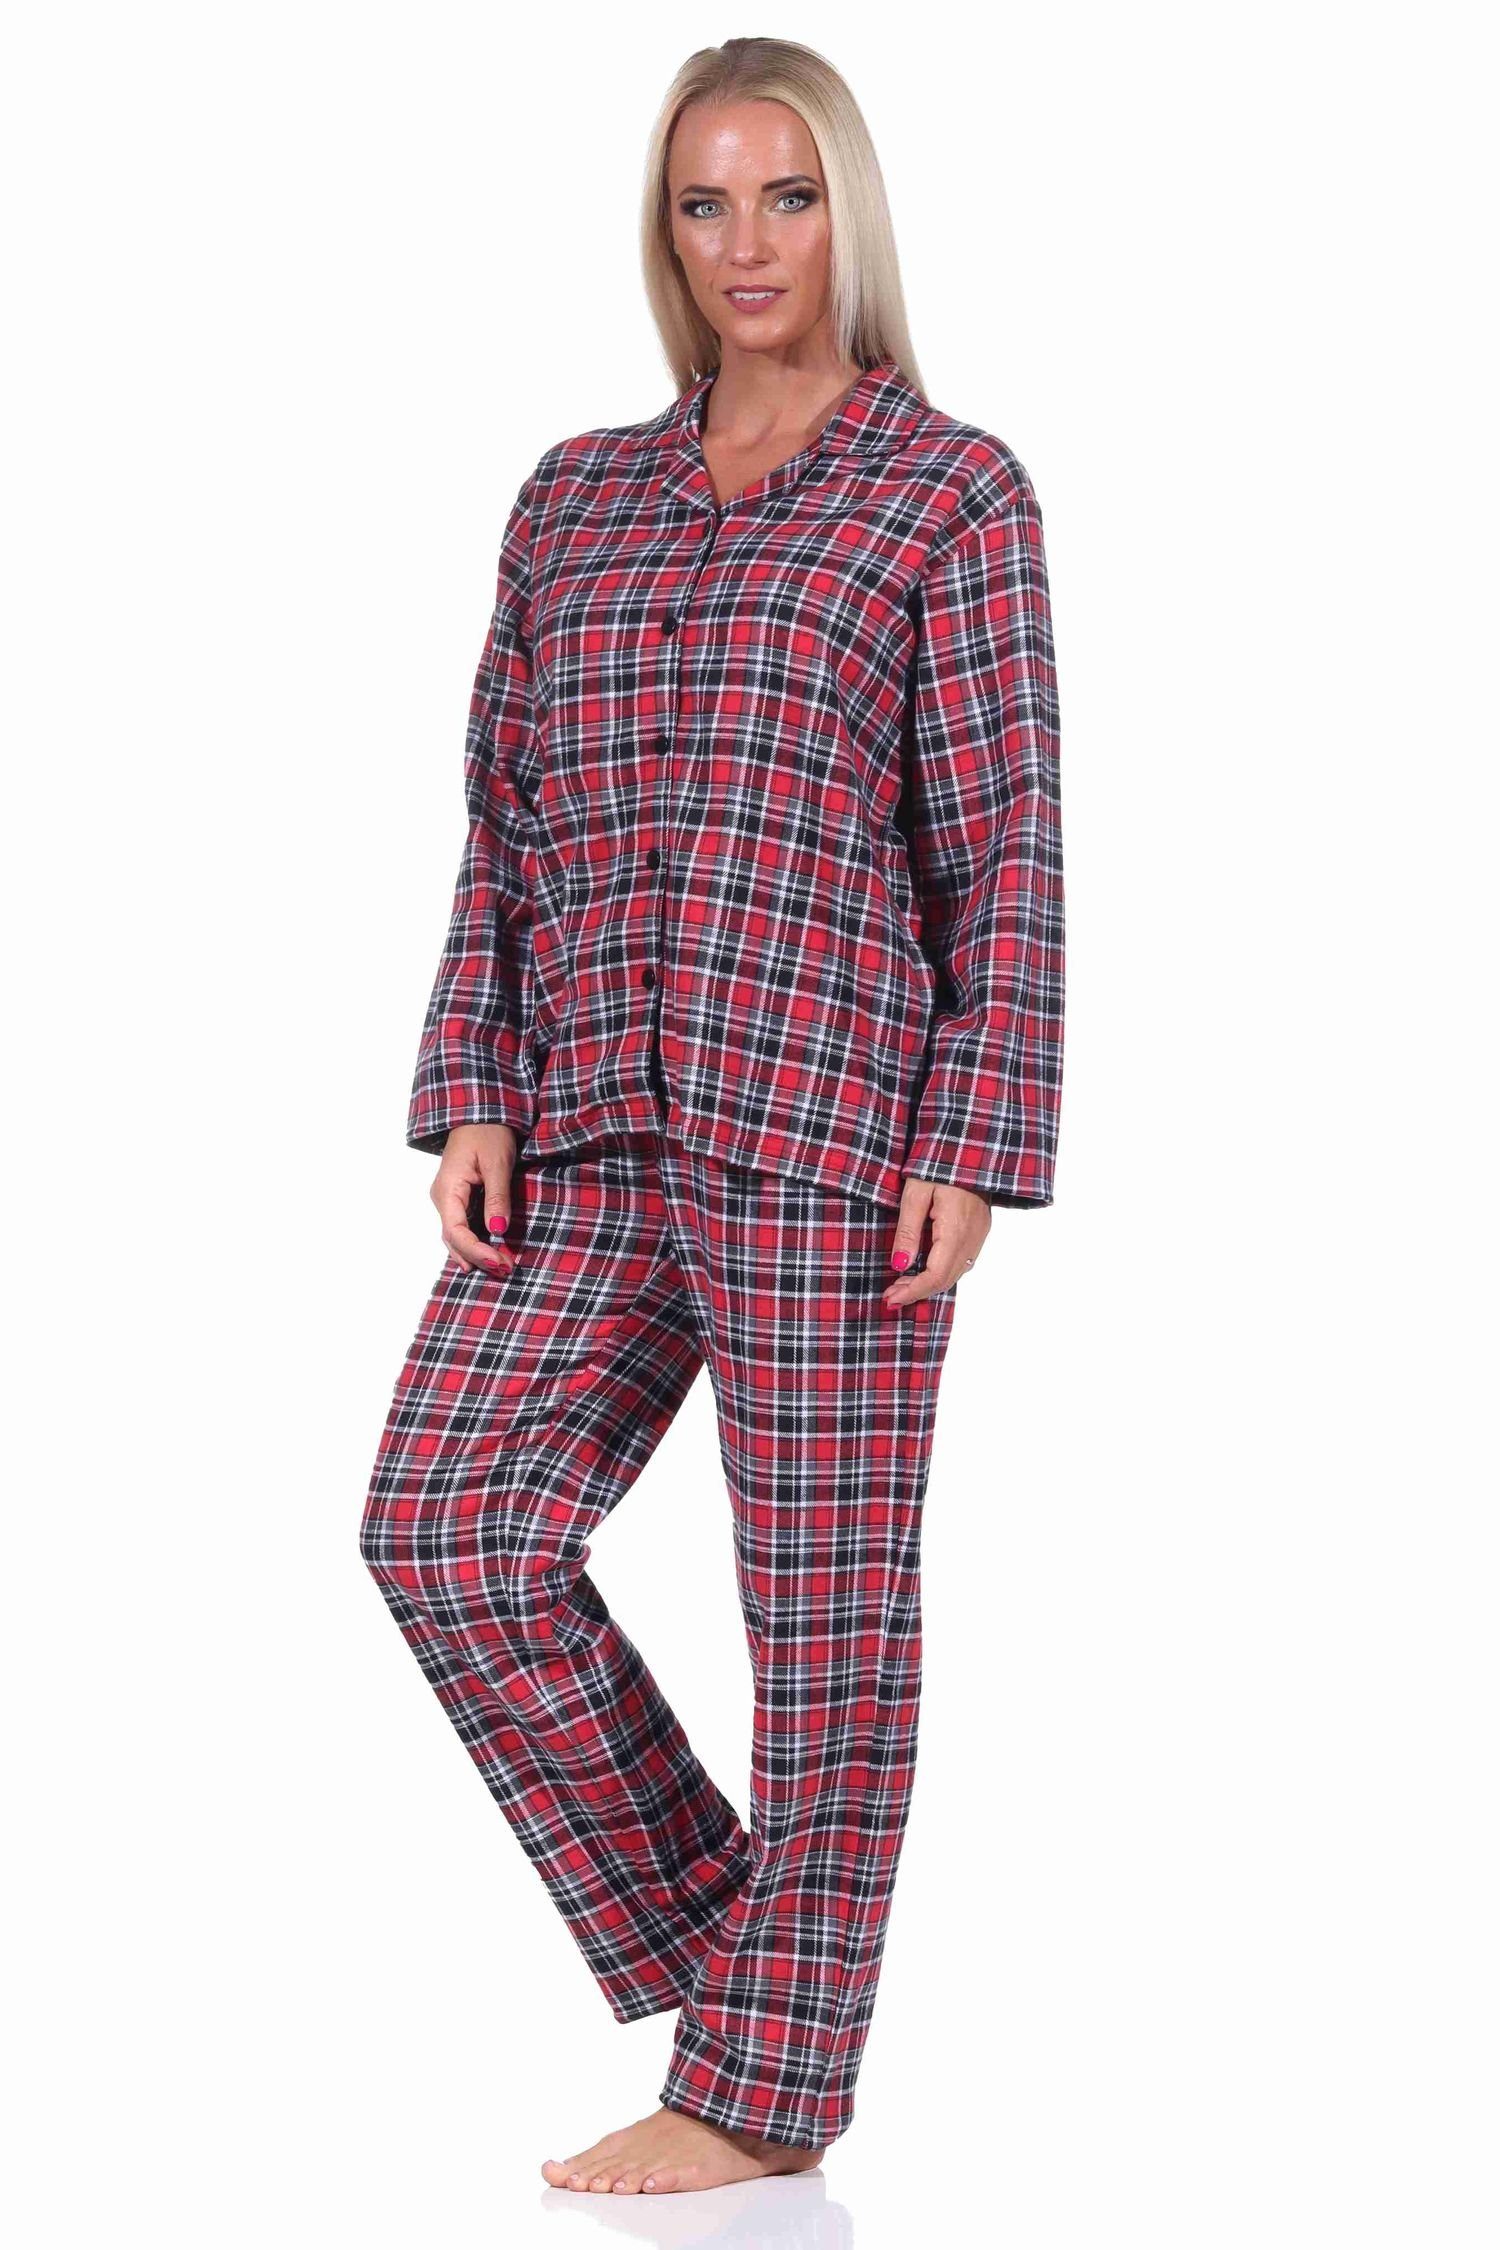 15 Normann langarm 870 - Damen kariert Pyjama 222 Flanell SchlafanzugSet